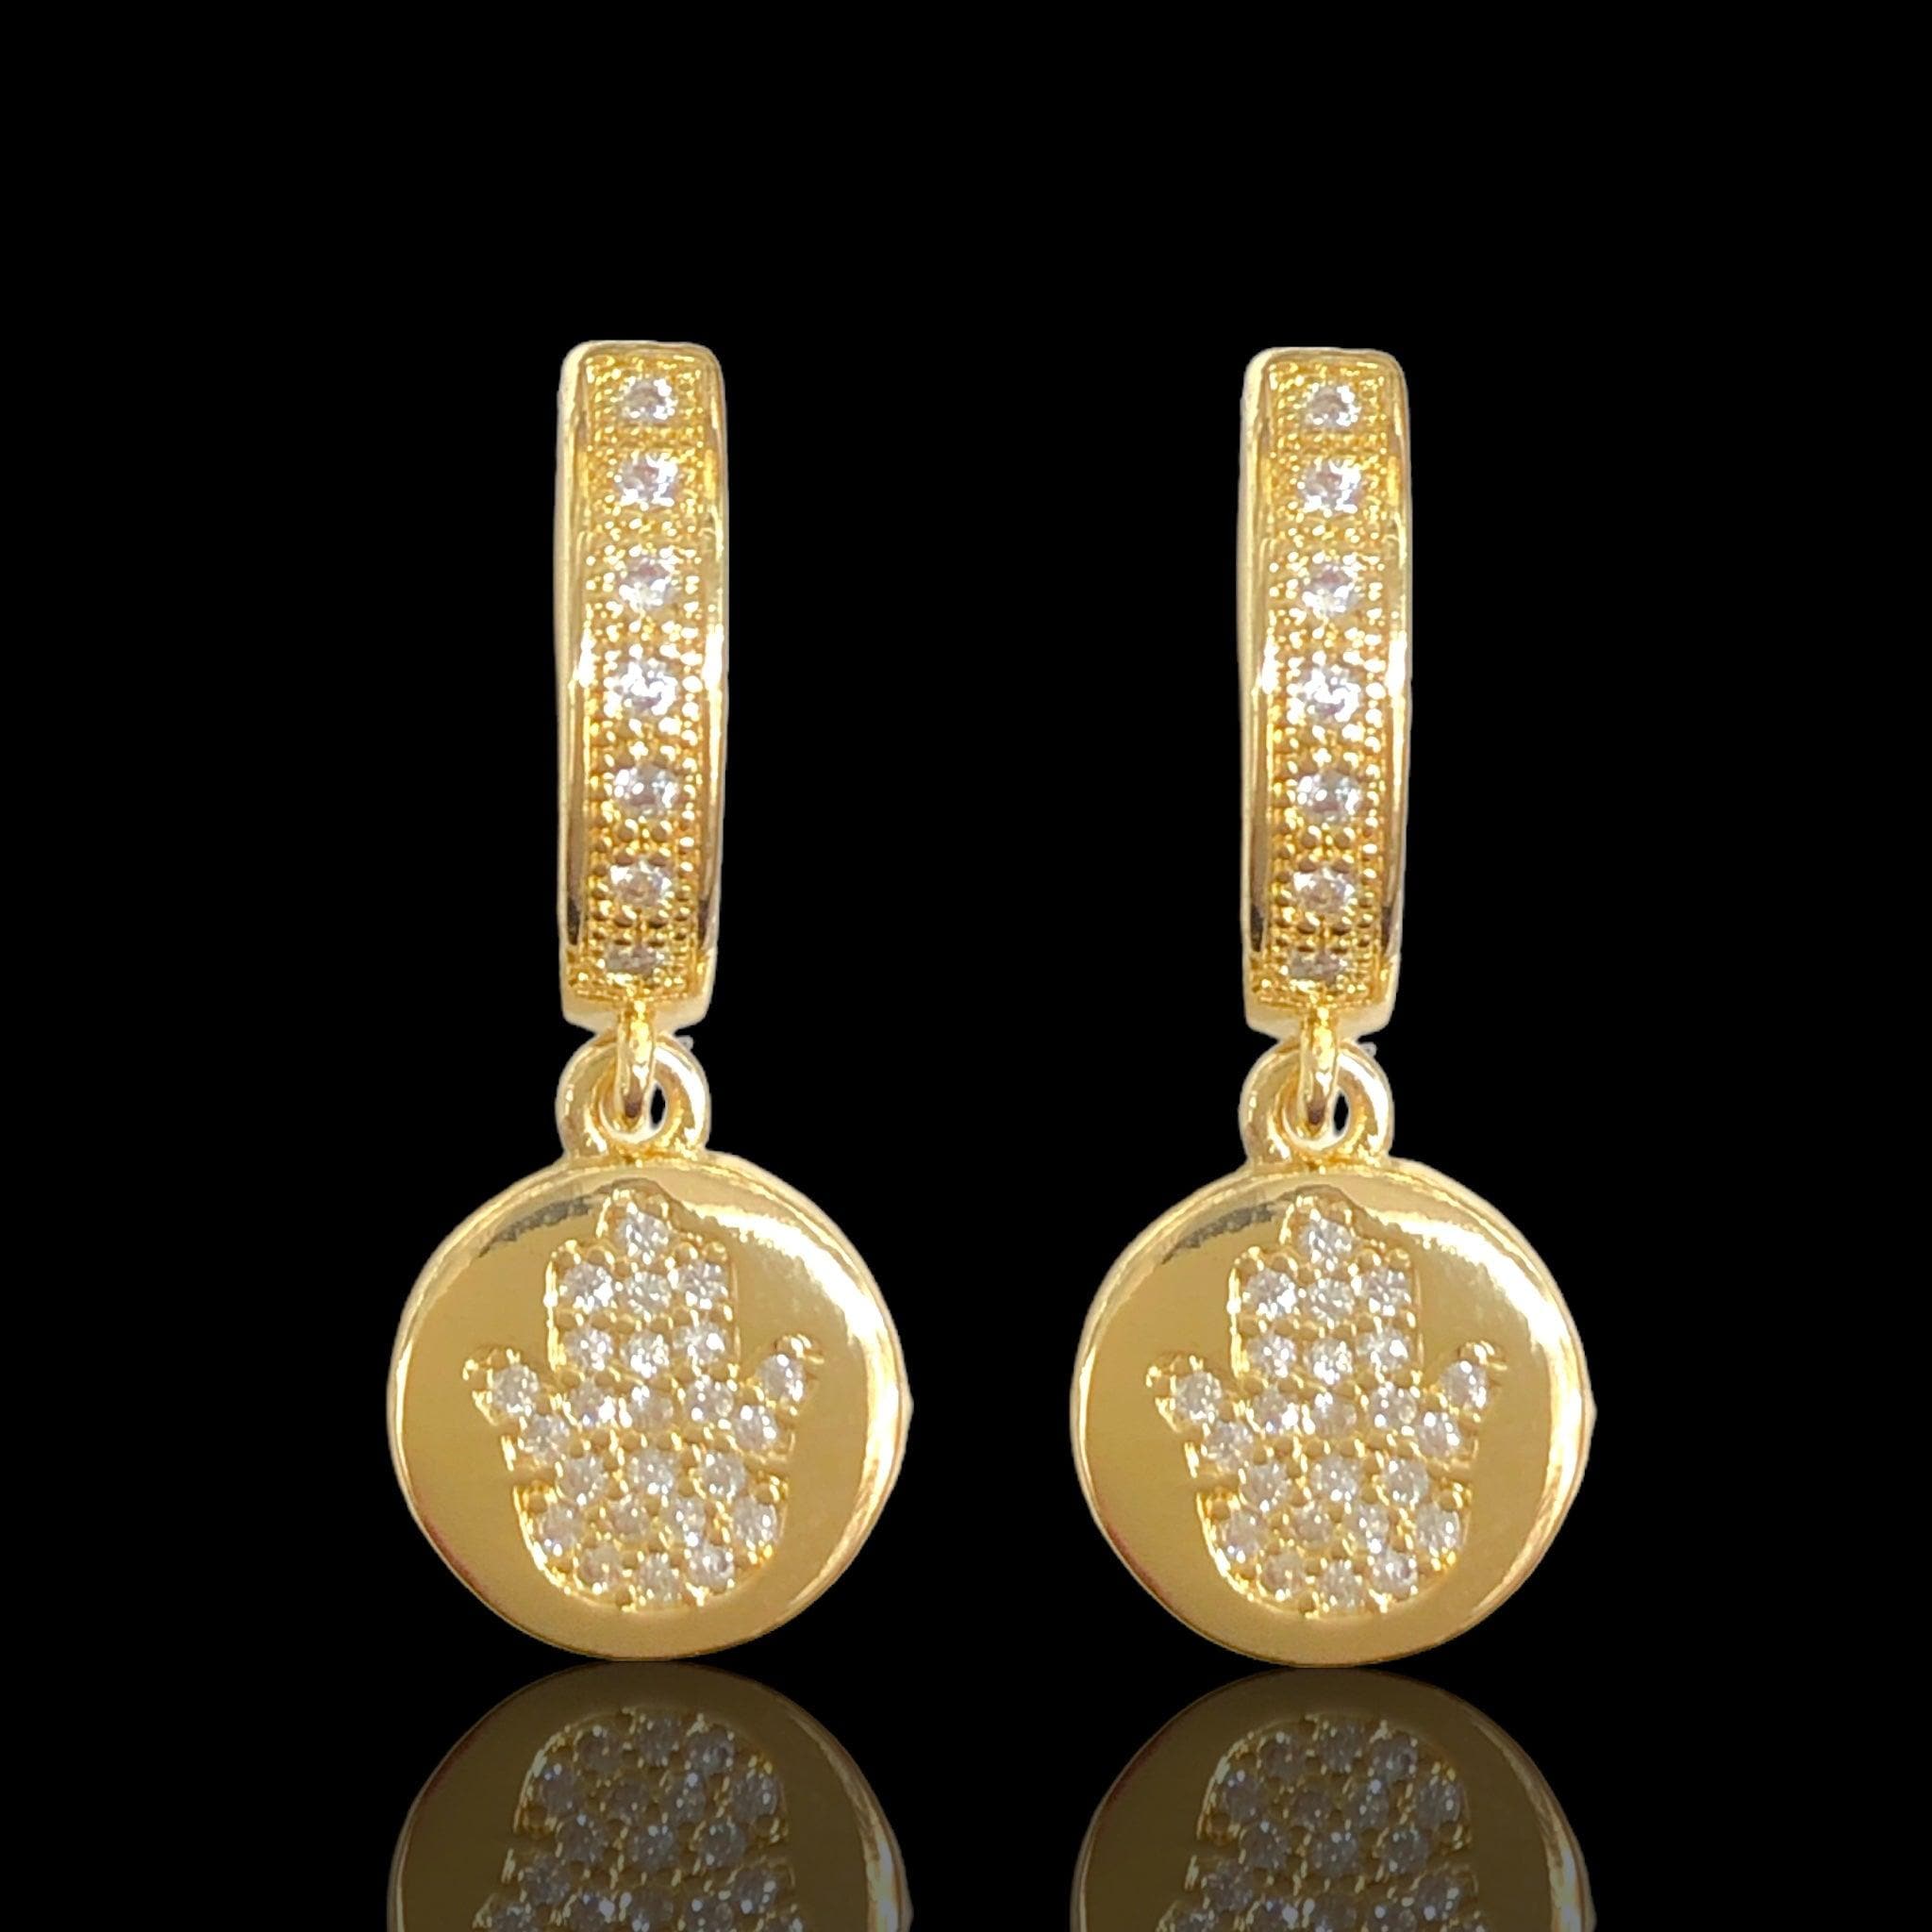 OLE 0635 18K Gold Filled Hamsa Dangle CZ Earrings- kuania oro laminado